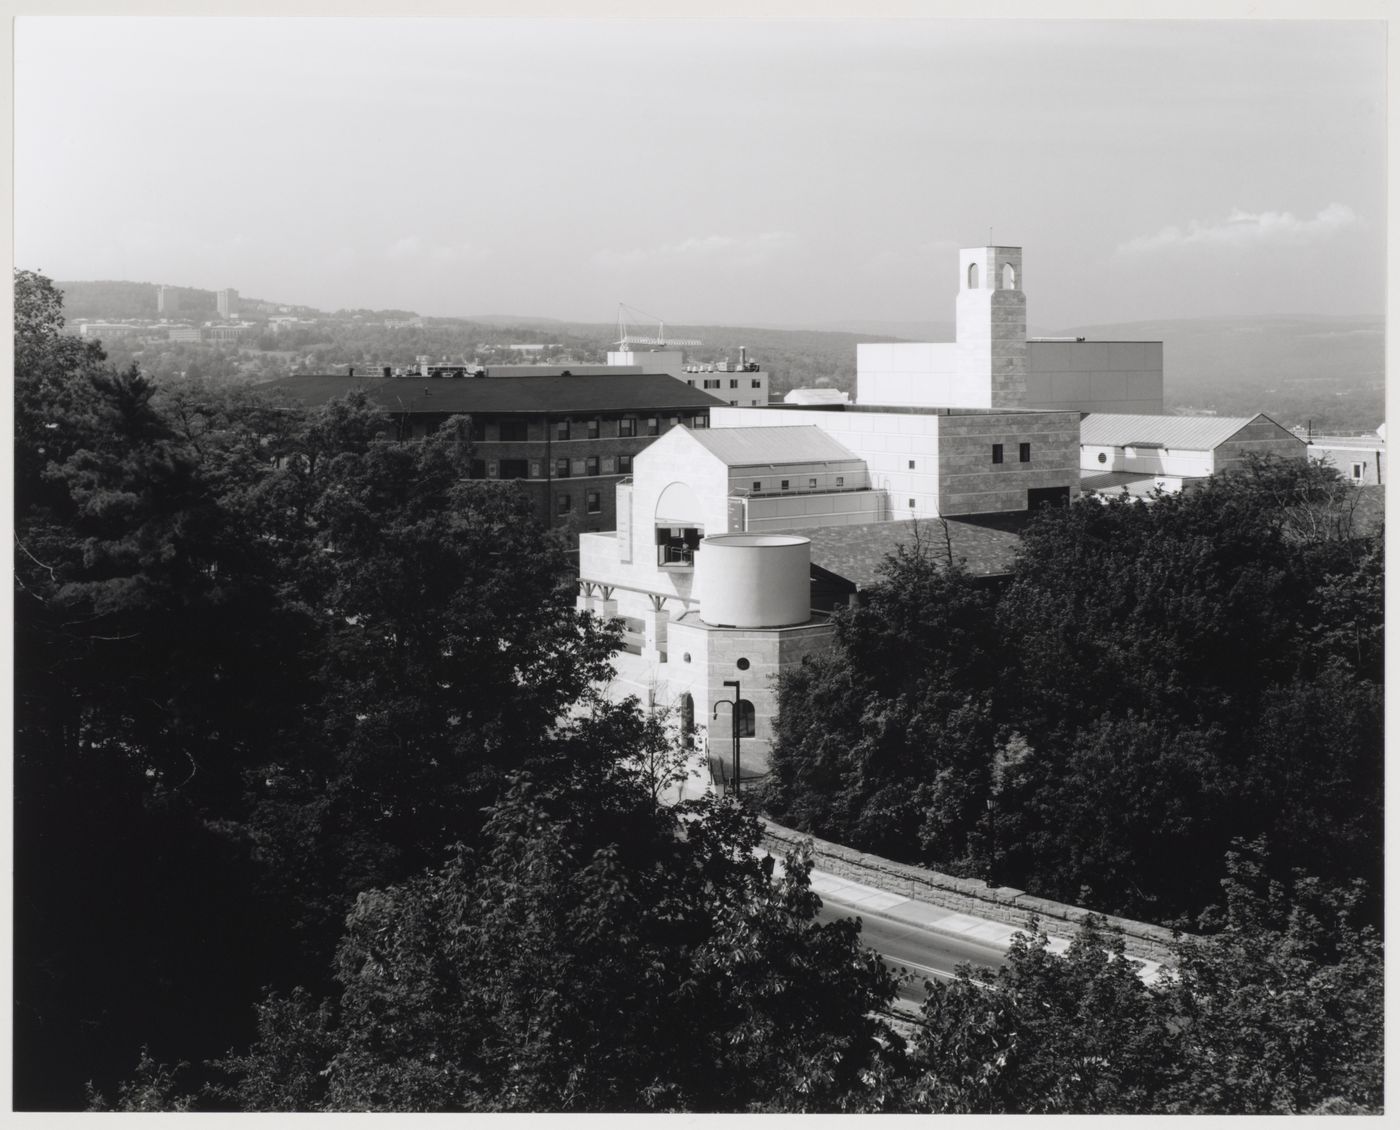 Center for Theatre Arts, Cornell University, Ithaca, New York: exterior view